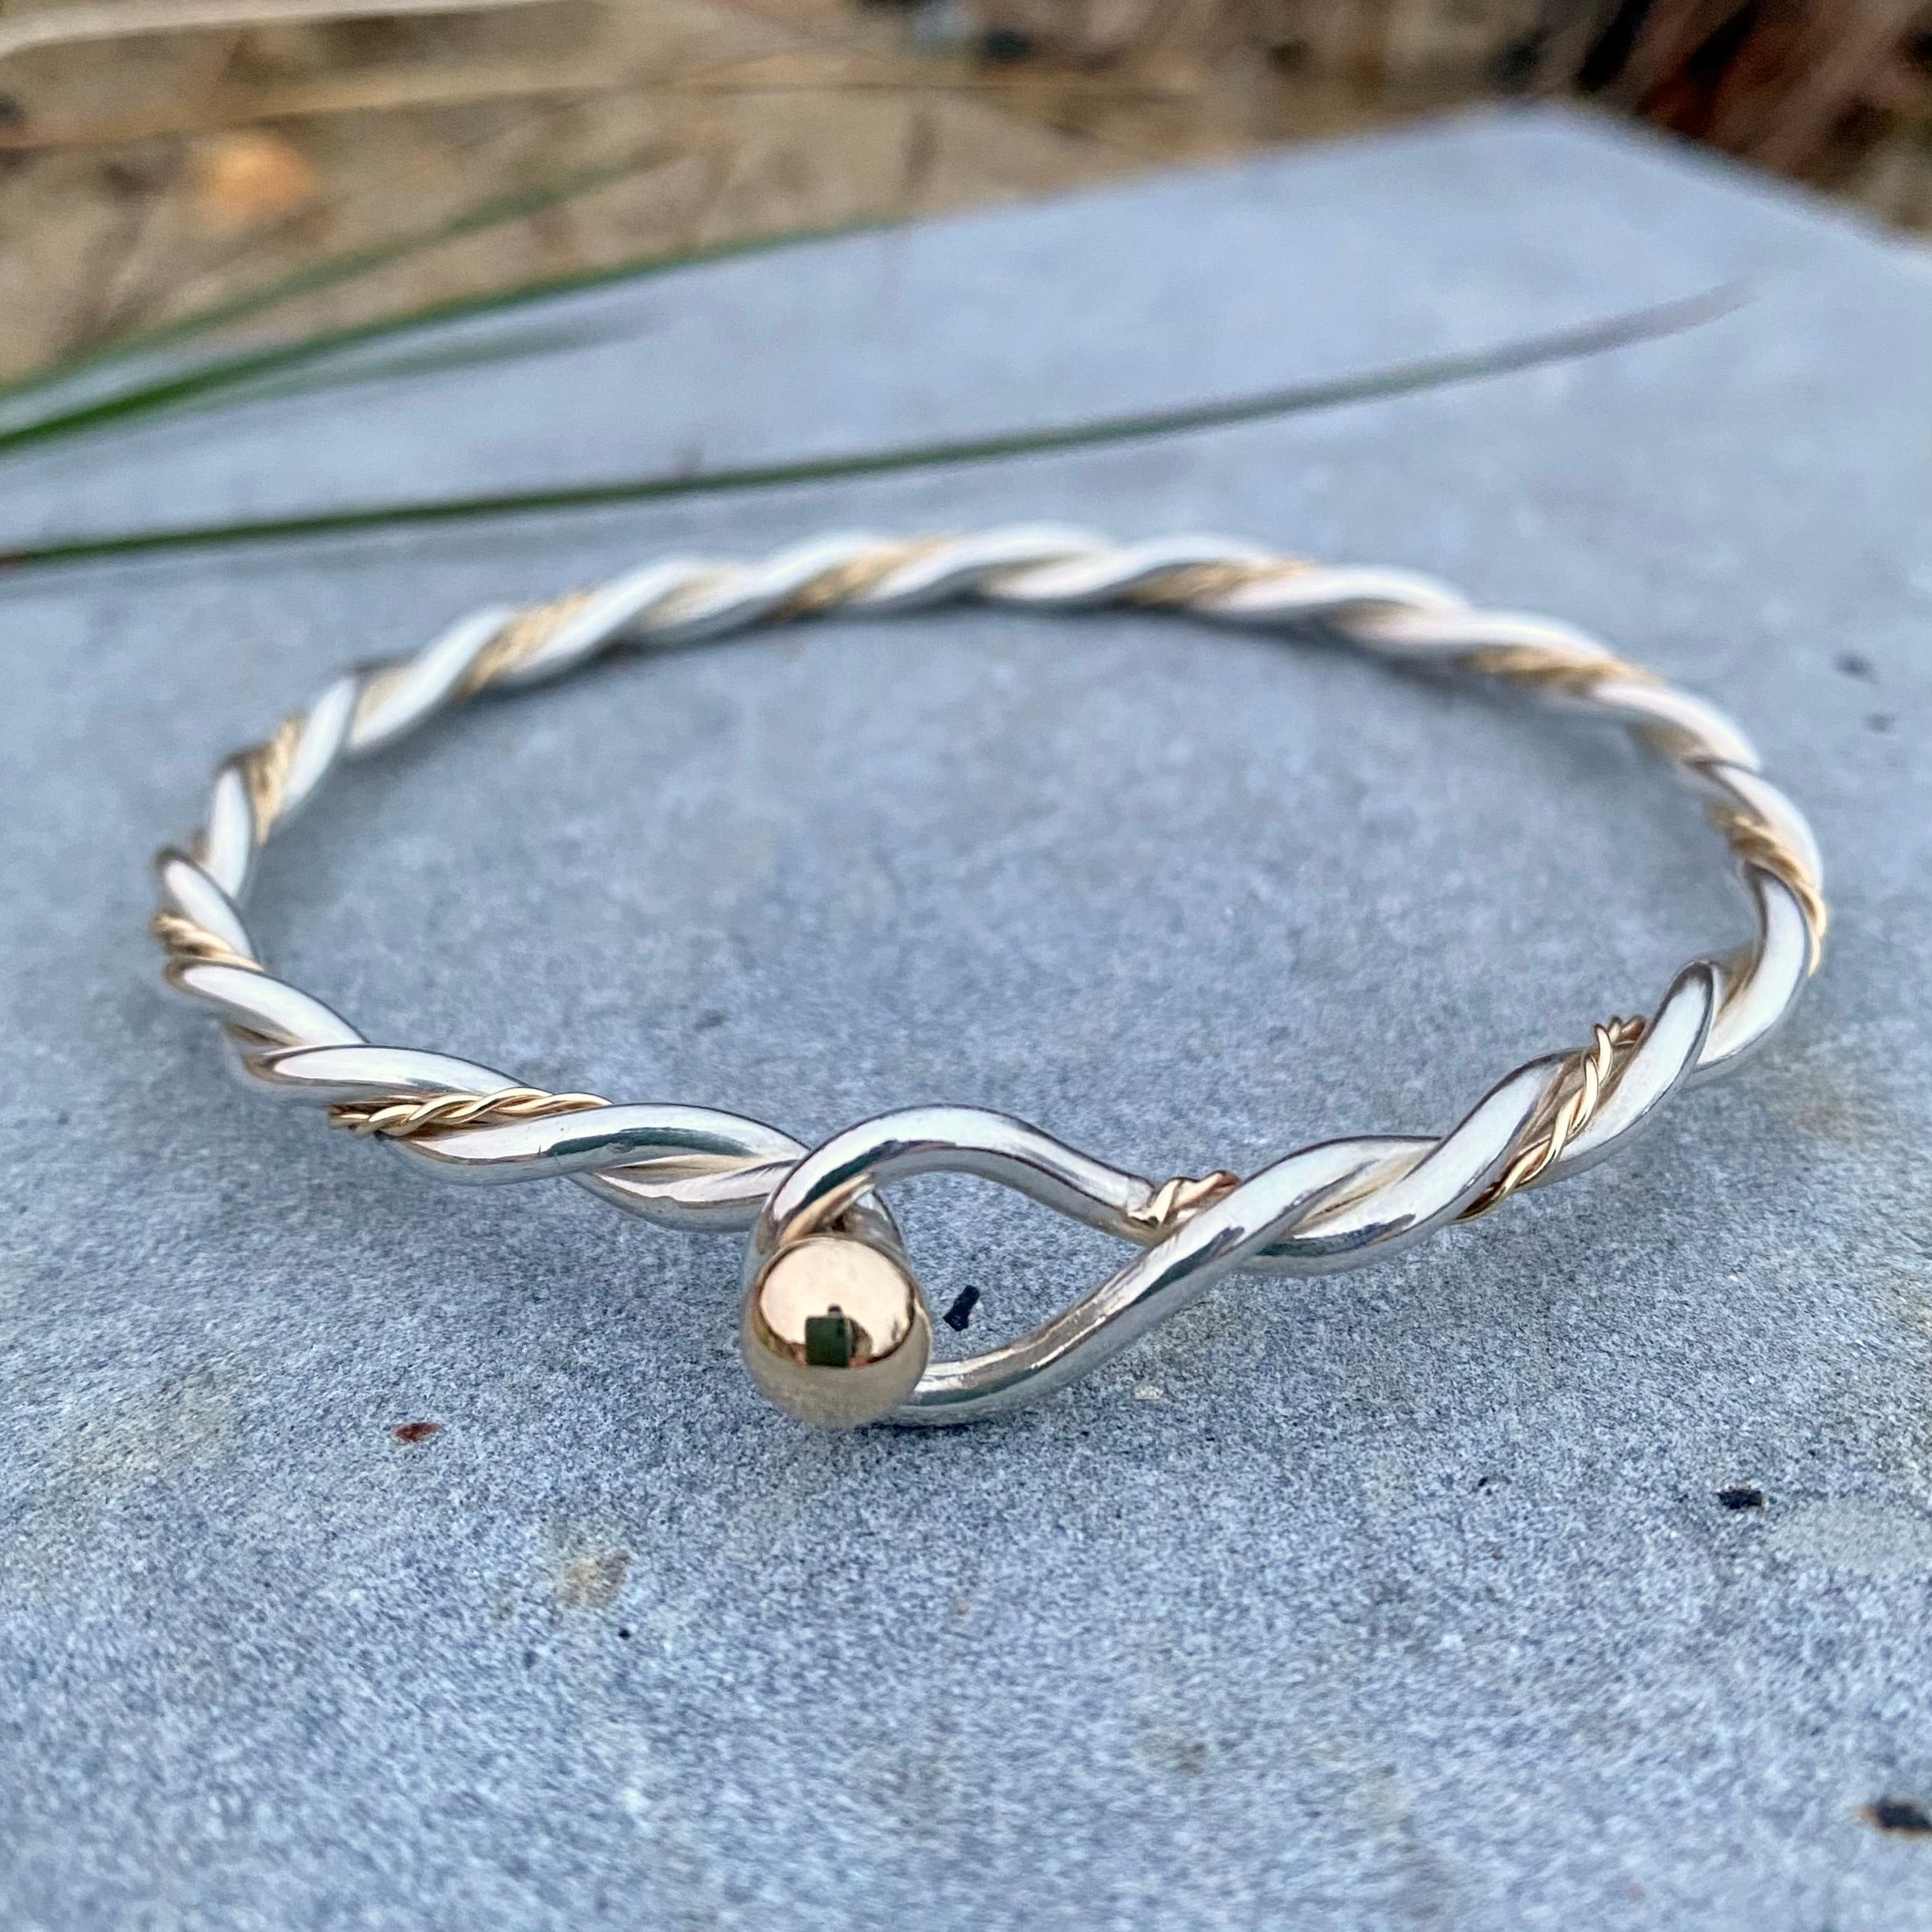 Cape Cod Jewelry Sterling Silver Cuff Bracelet | Ross-Simons